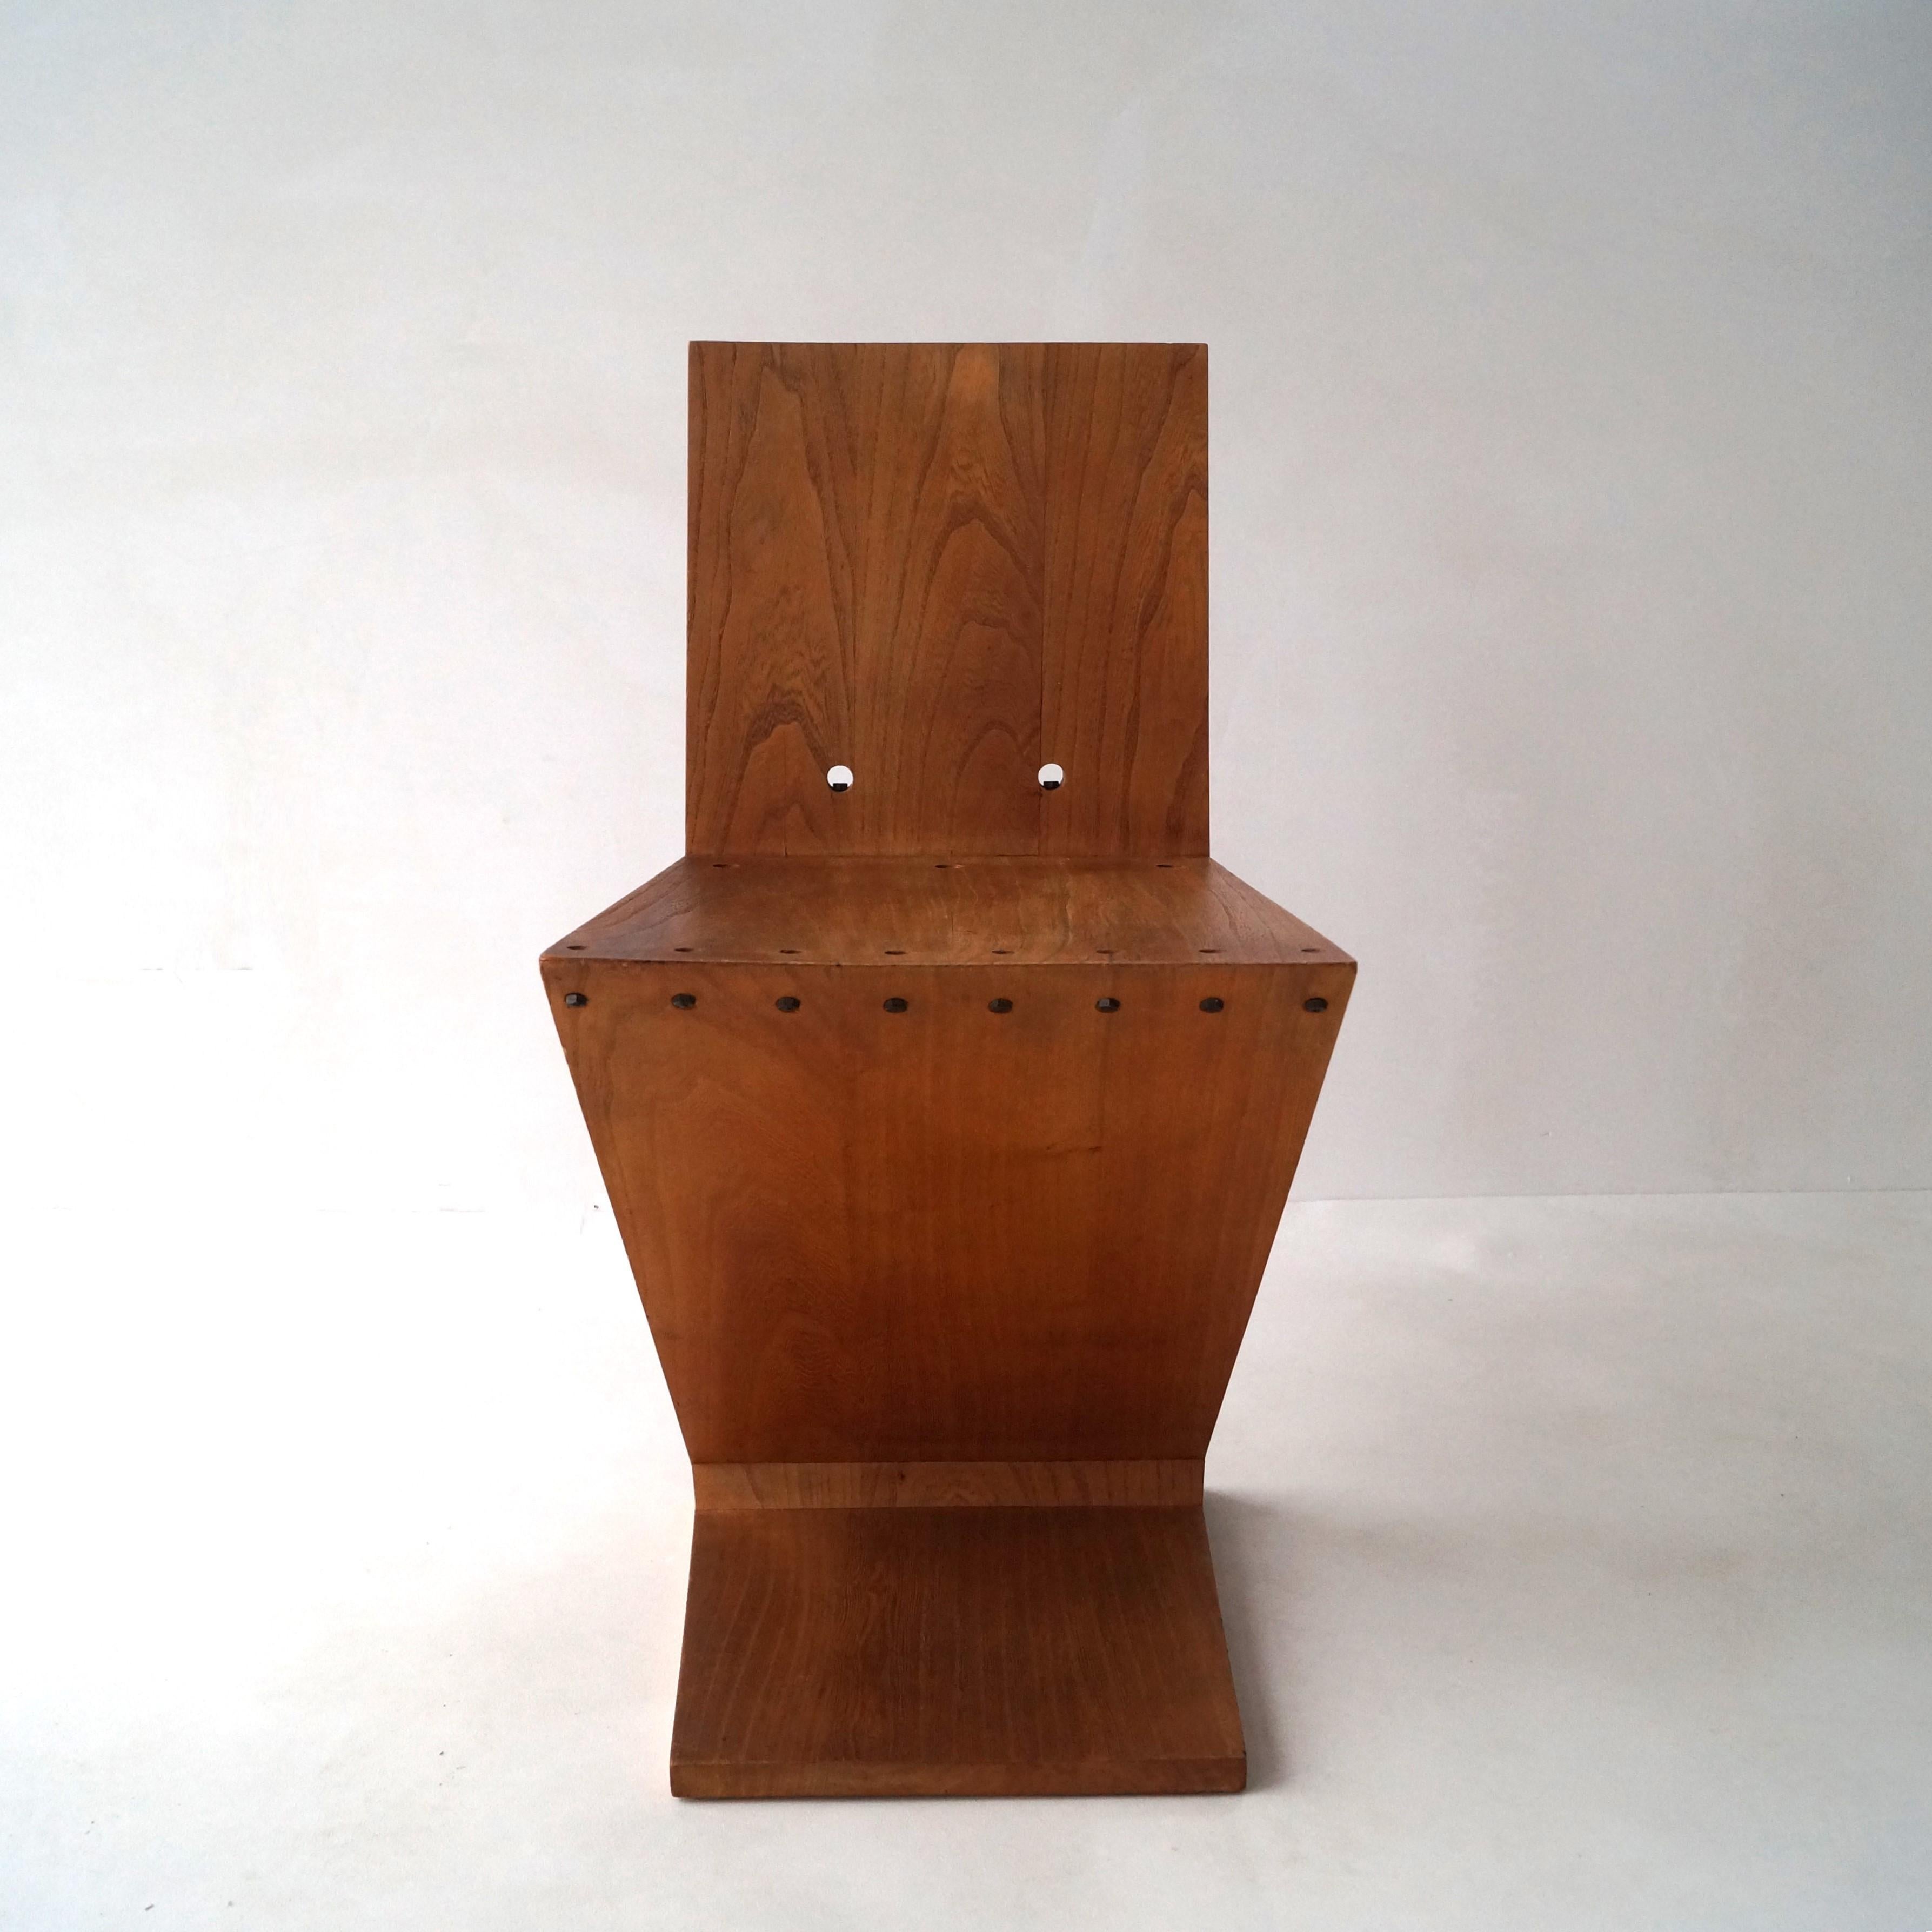 Gerrit Rietveld Zig Zag chair by G.A. van de Groenekan, late 1950s 1